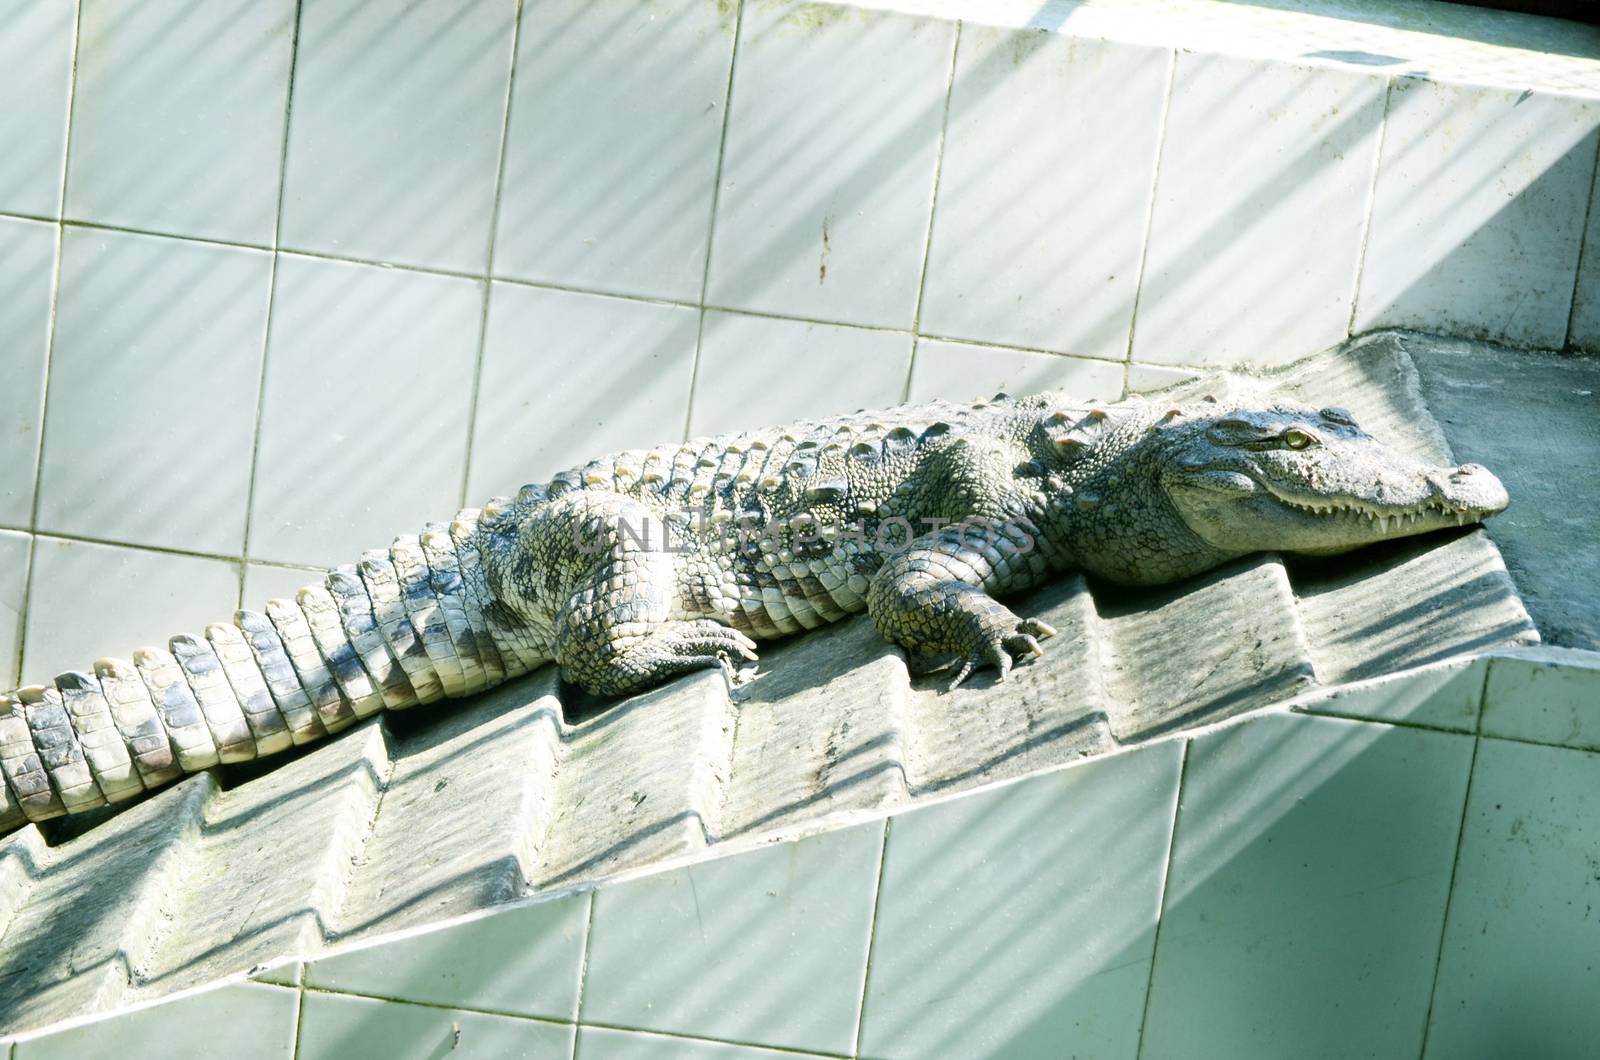 Nile Crocodile very closeup image capture